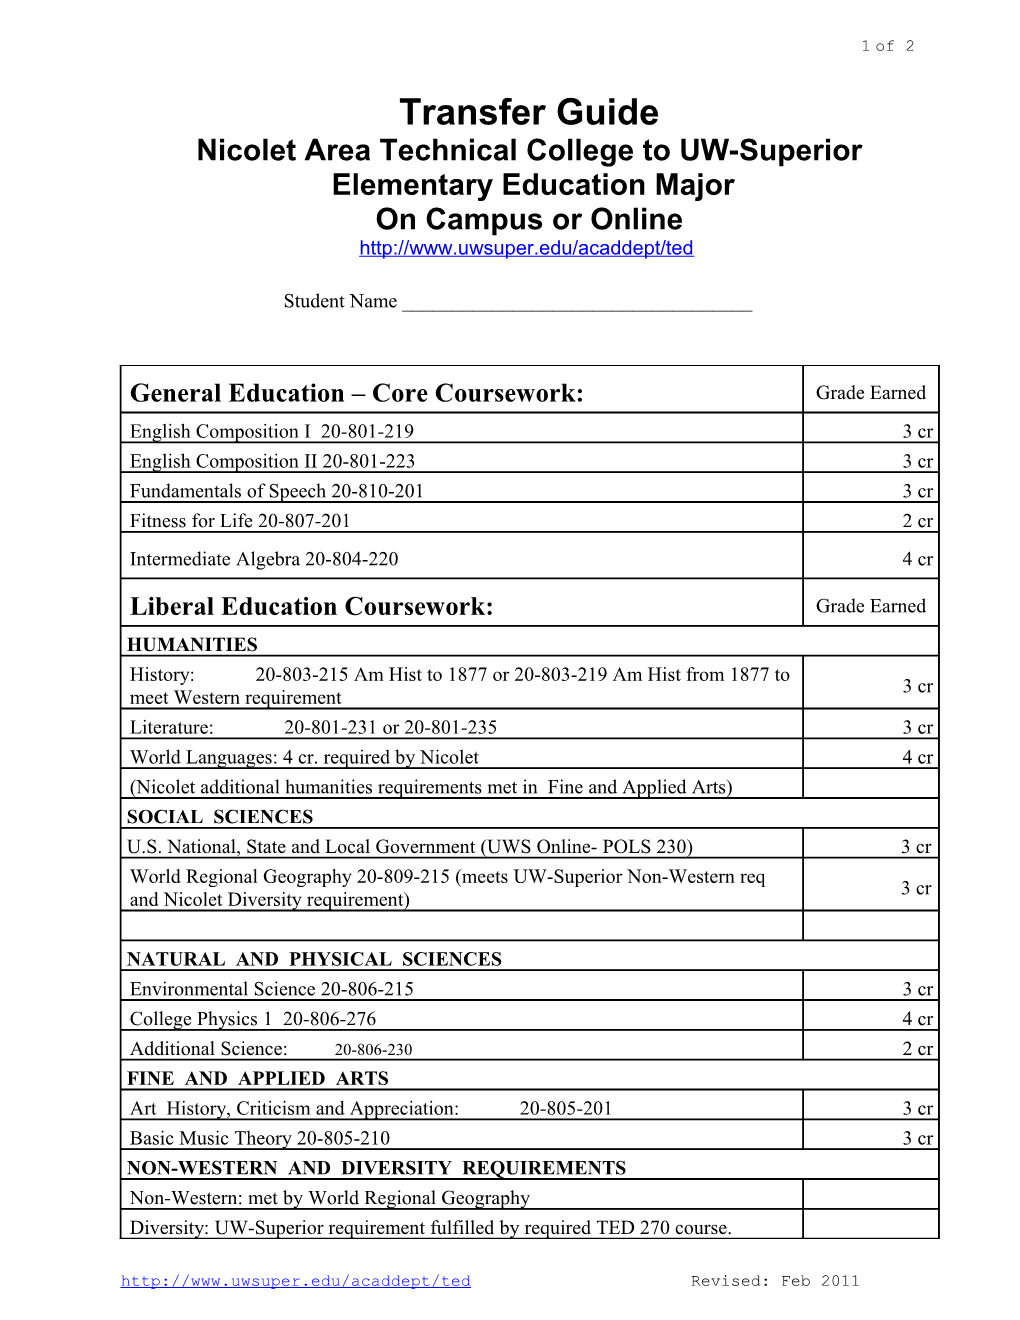 Elementary Education Handbook Revised March 2001